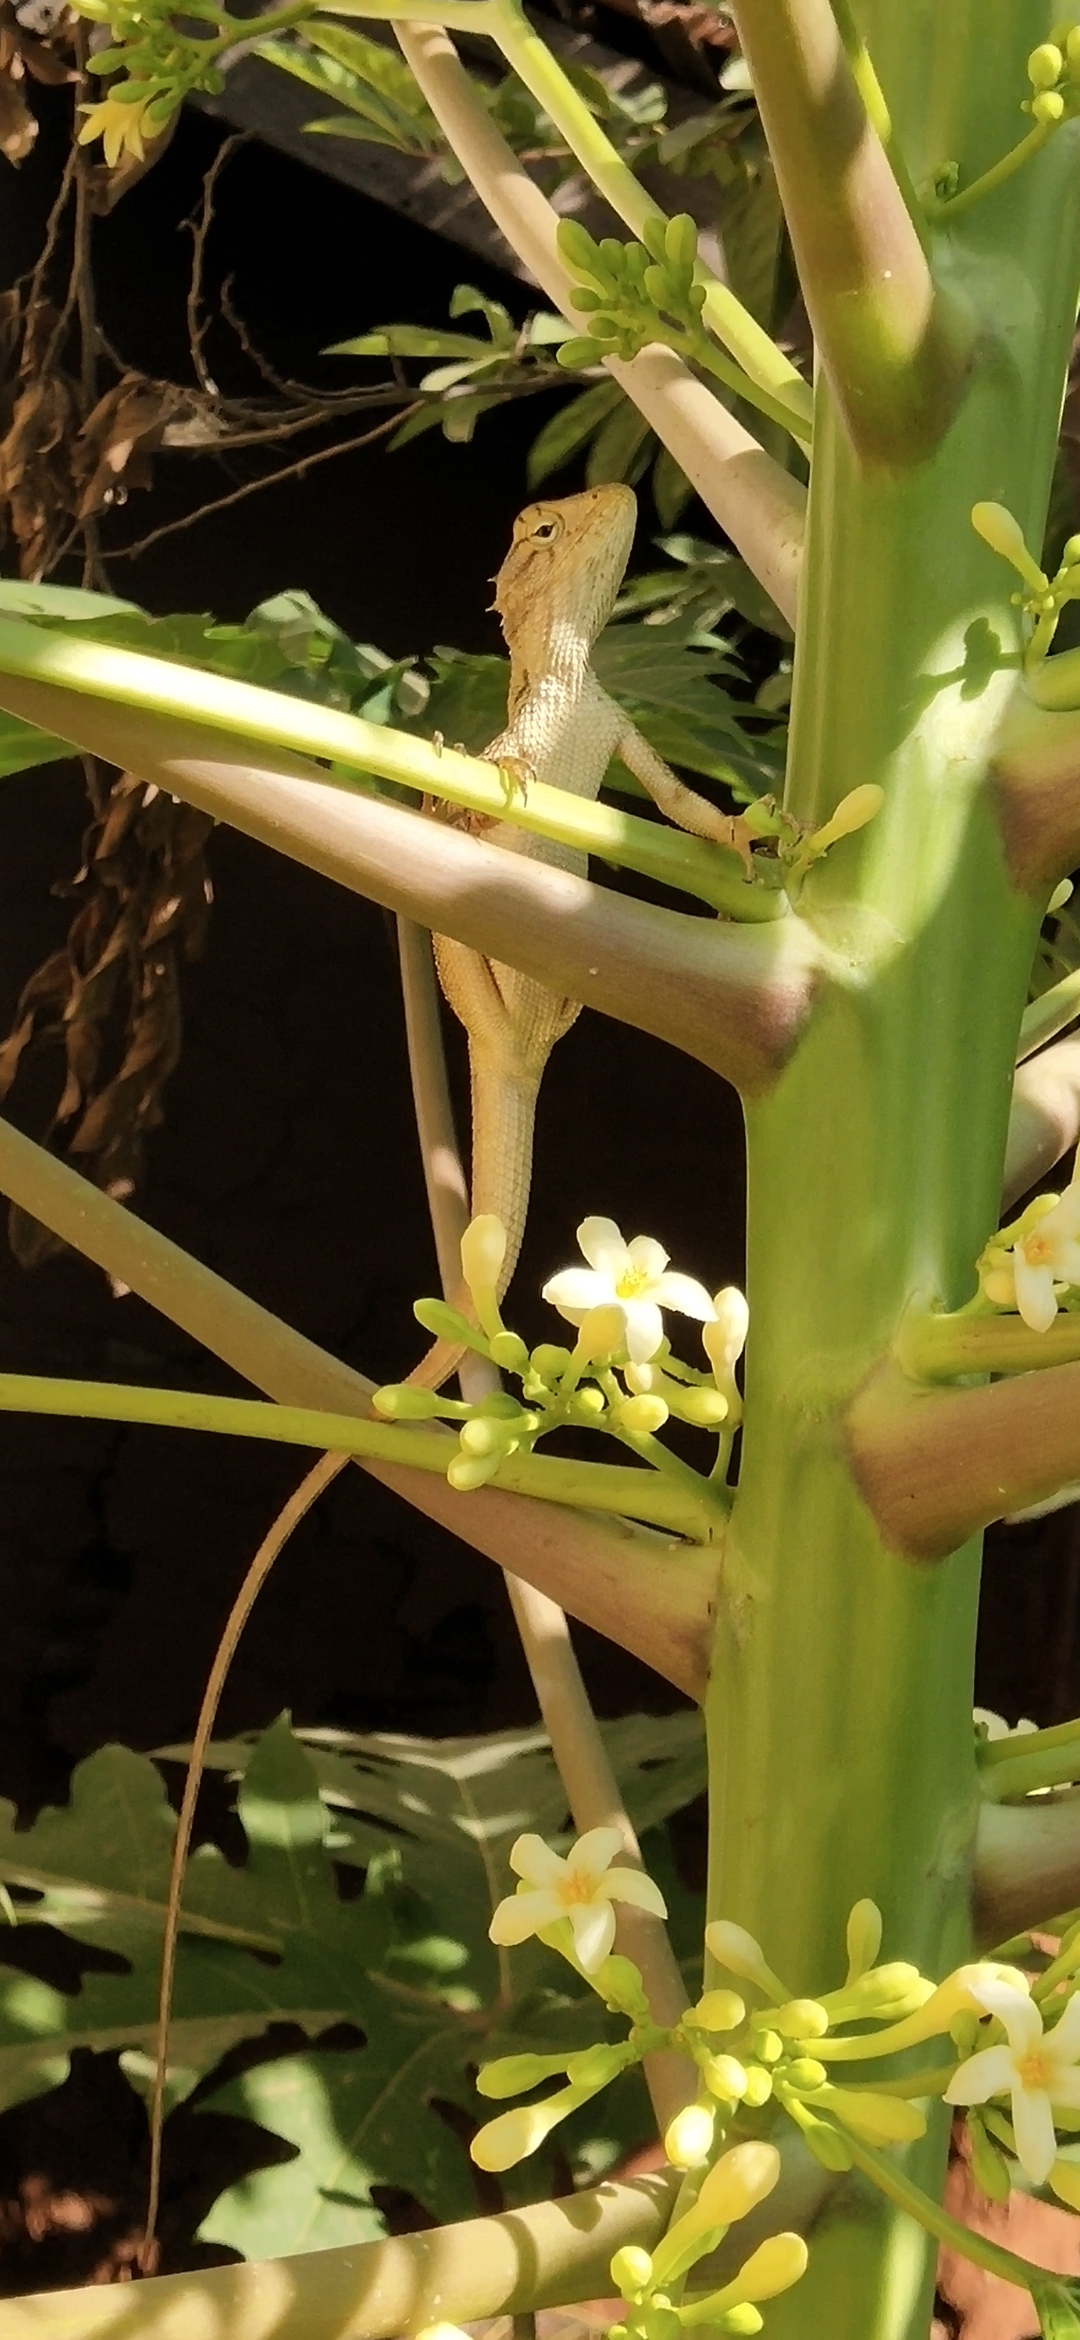 Lizard on plant stem